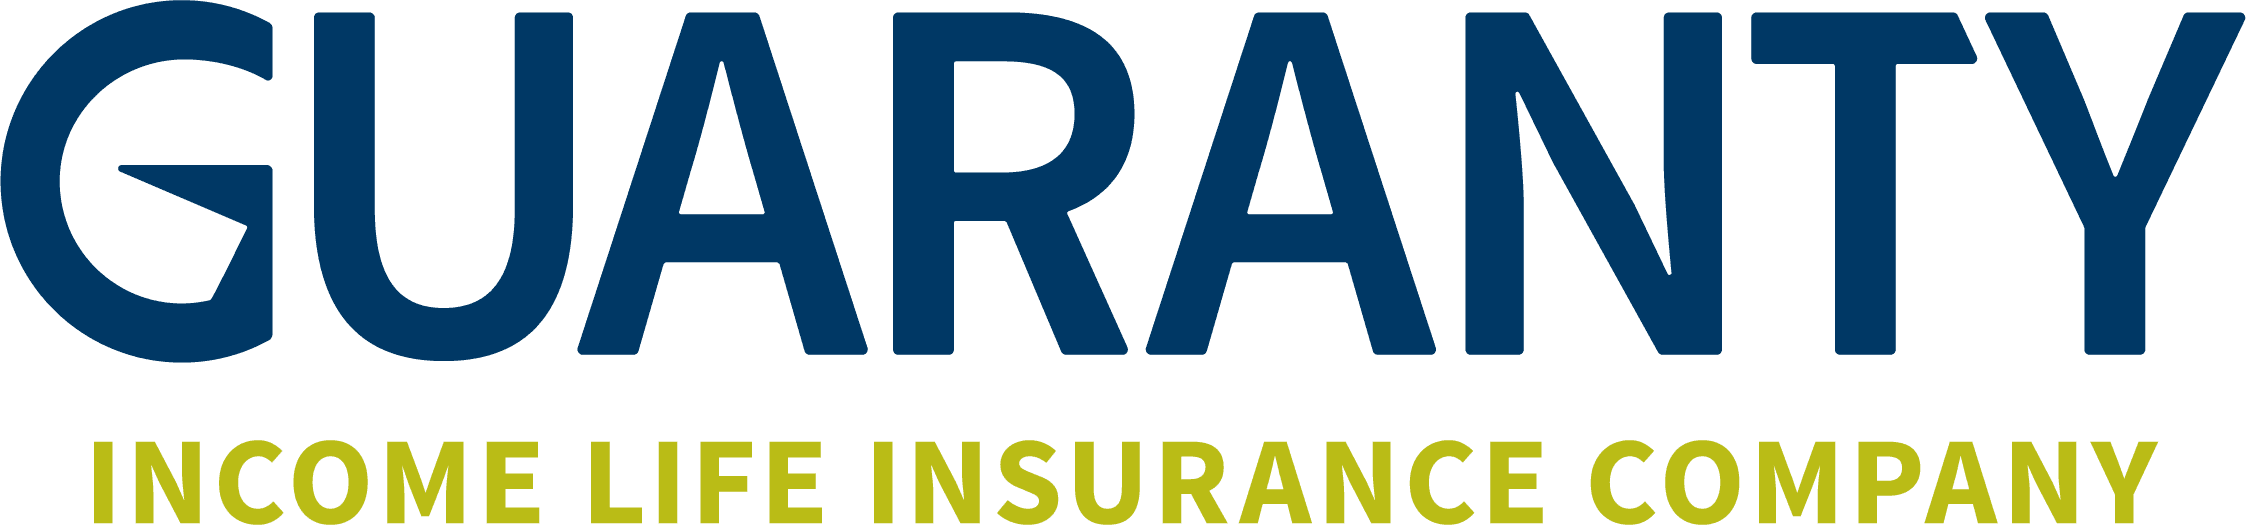 Guaranty Income Life Insurance Company